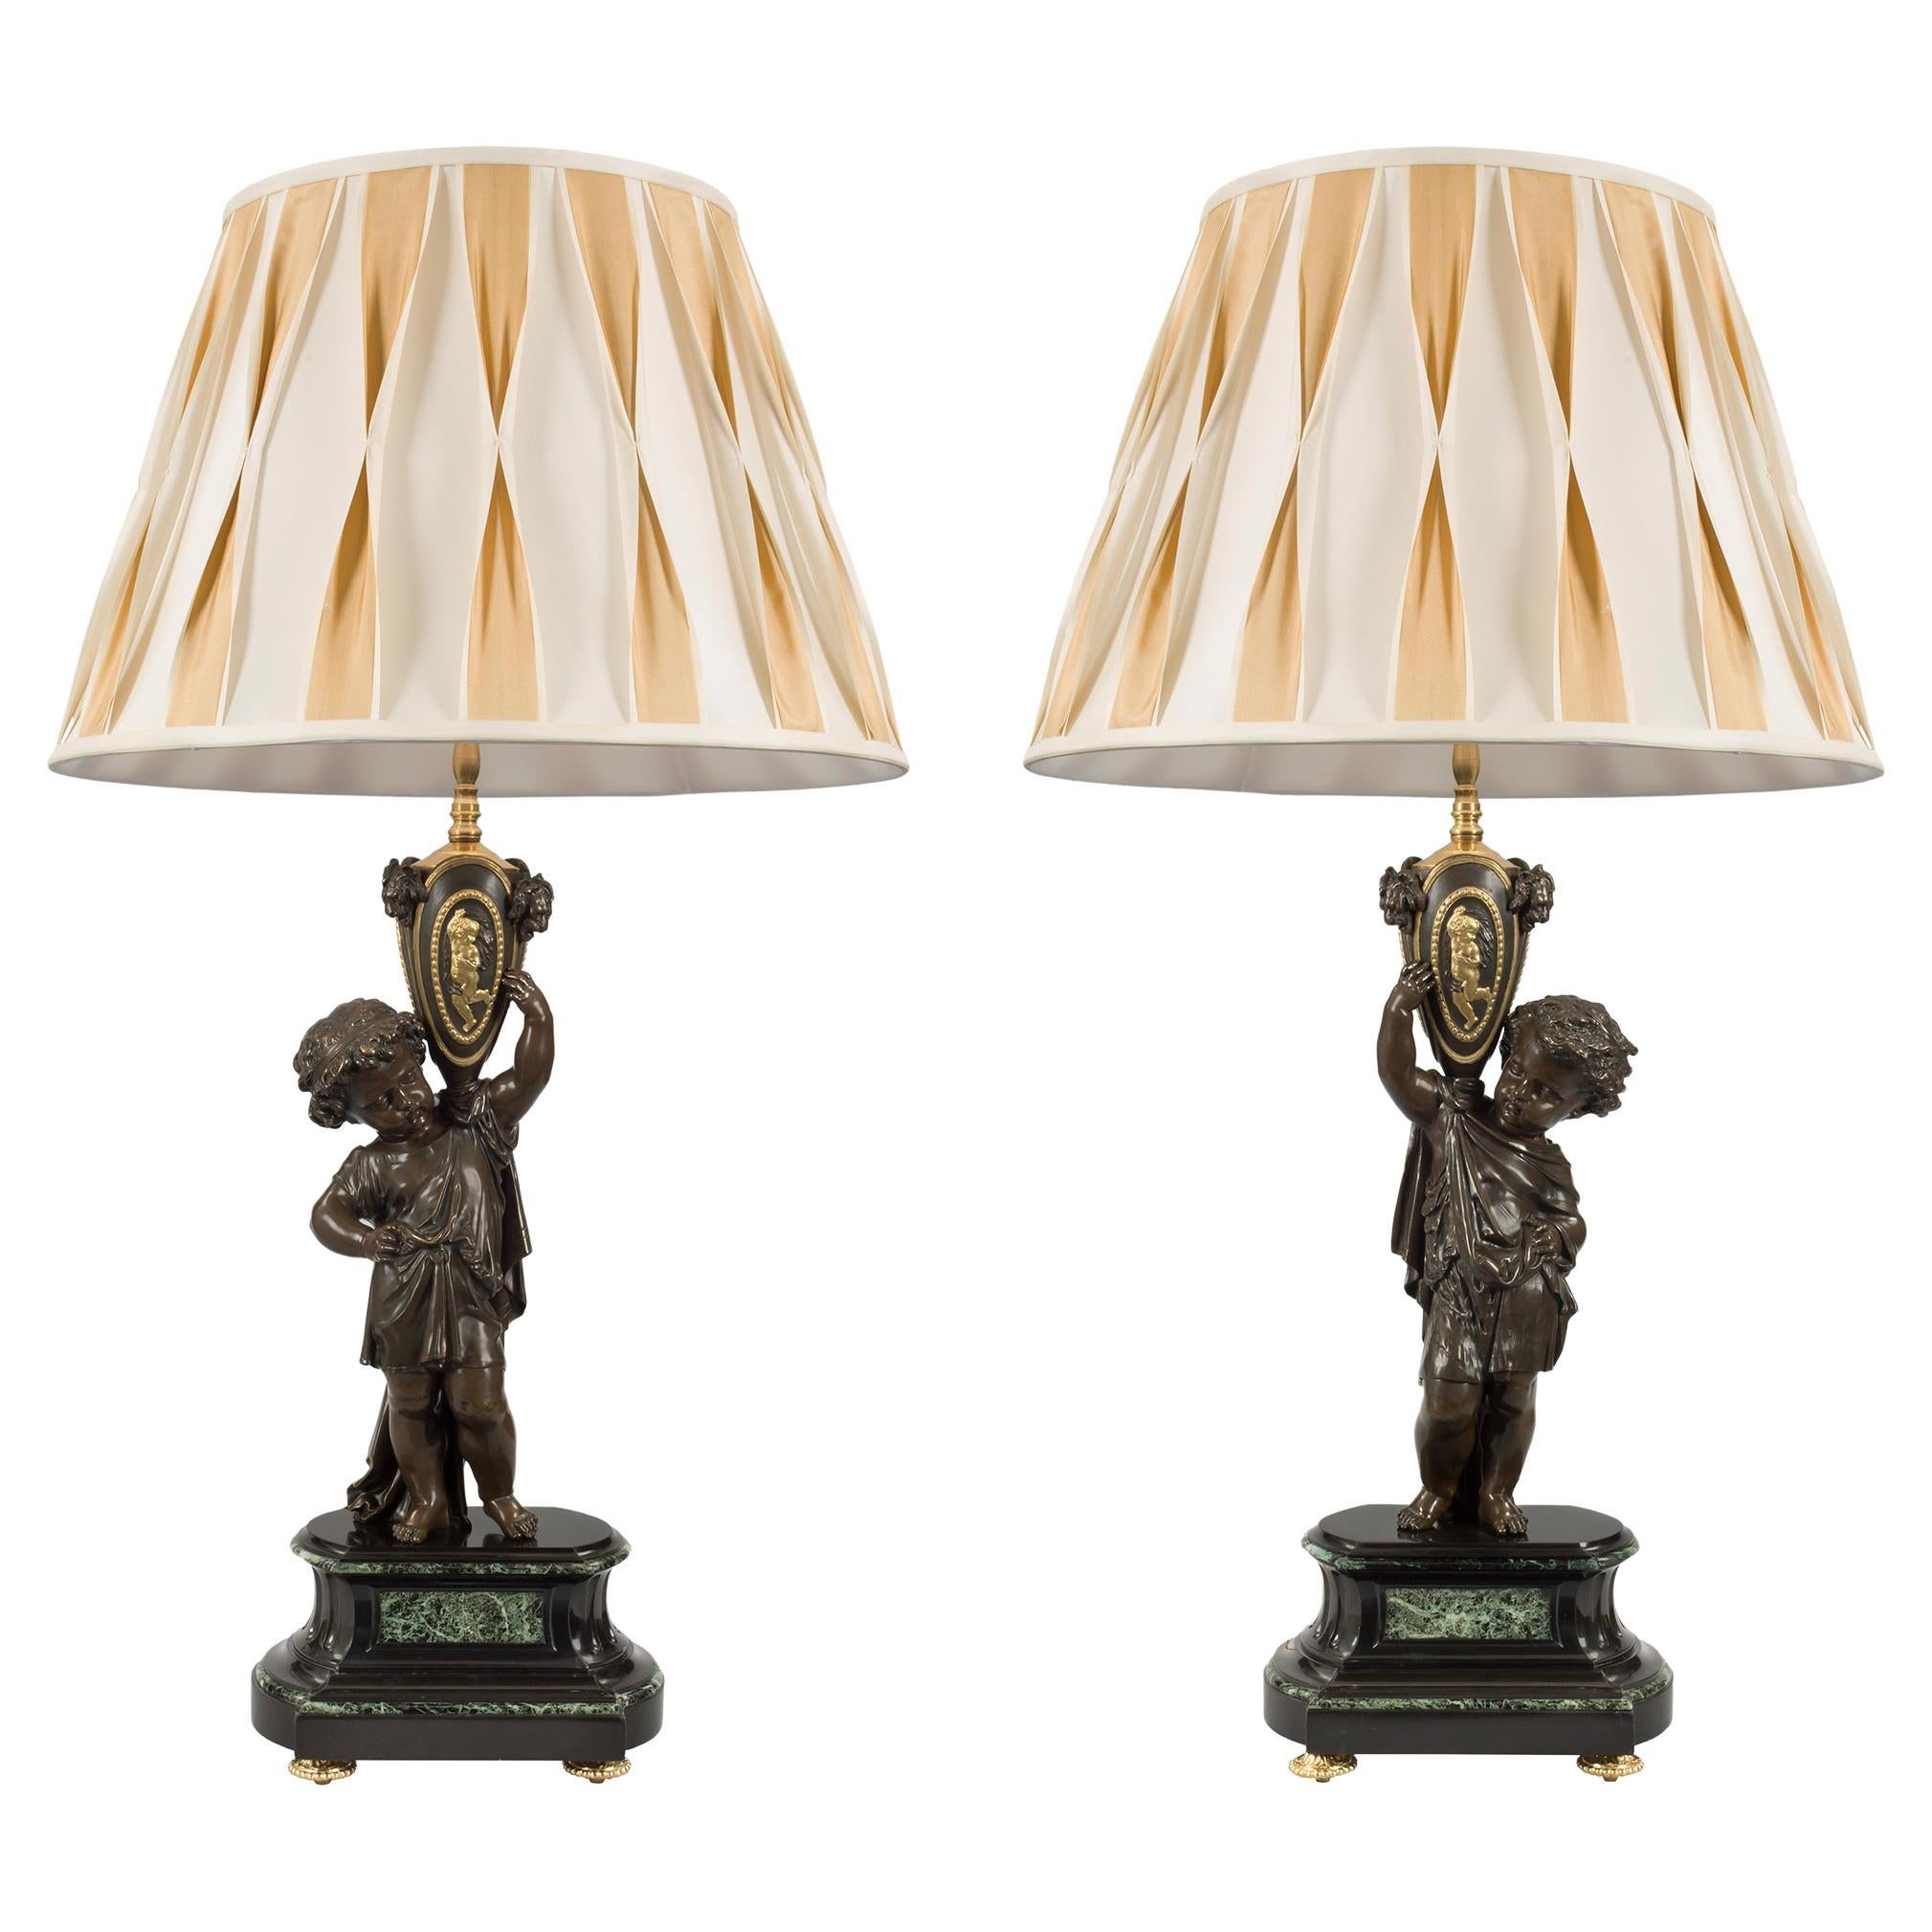 Pair of French 19th Century Louis XVI St. Belle Époque Period Lamps